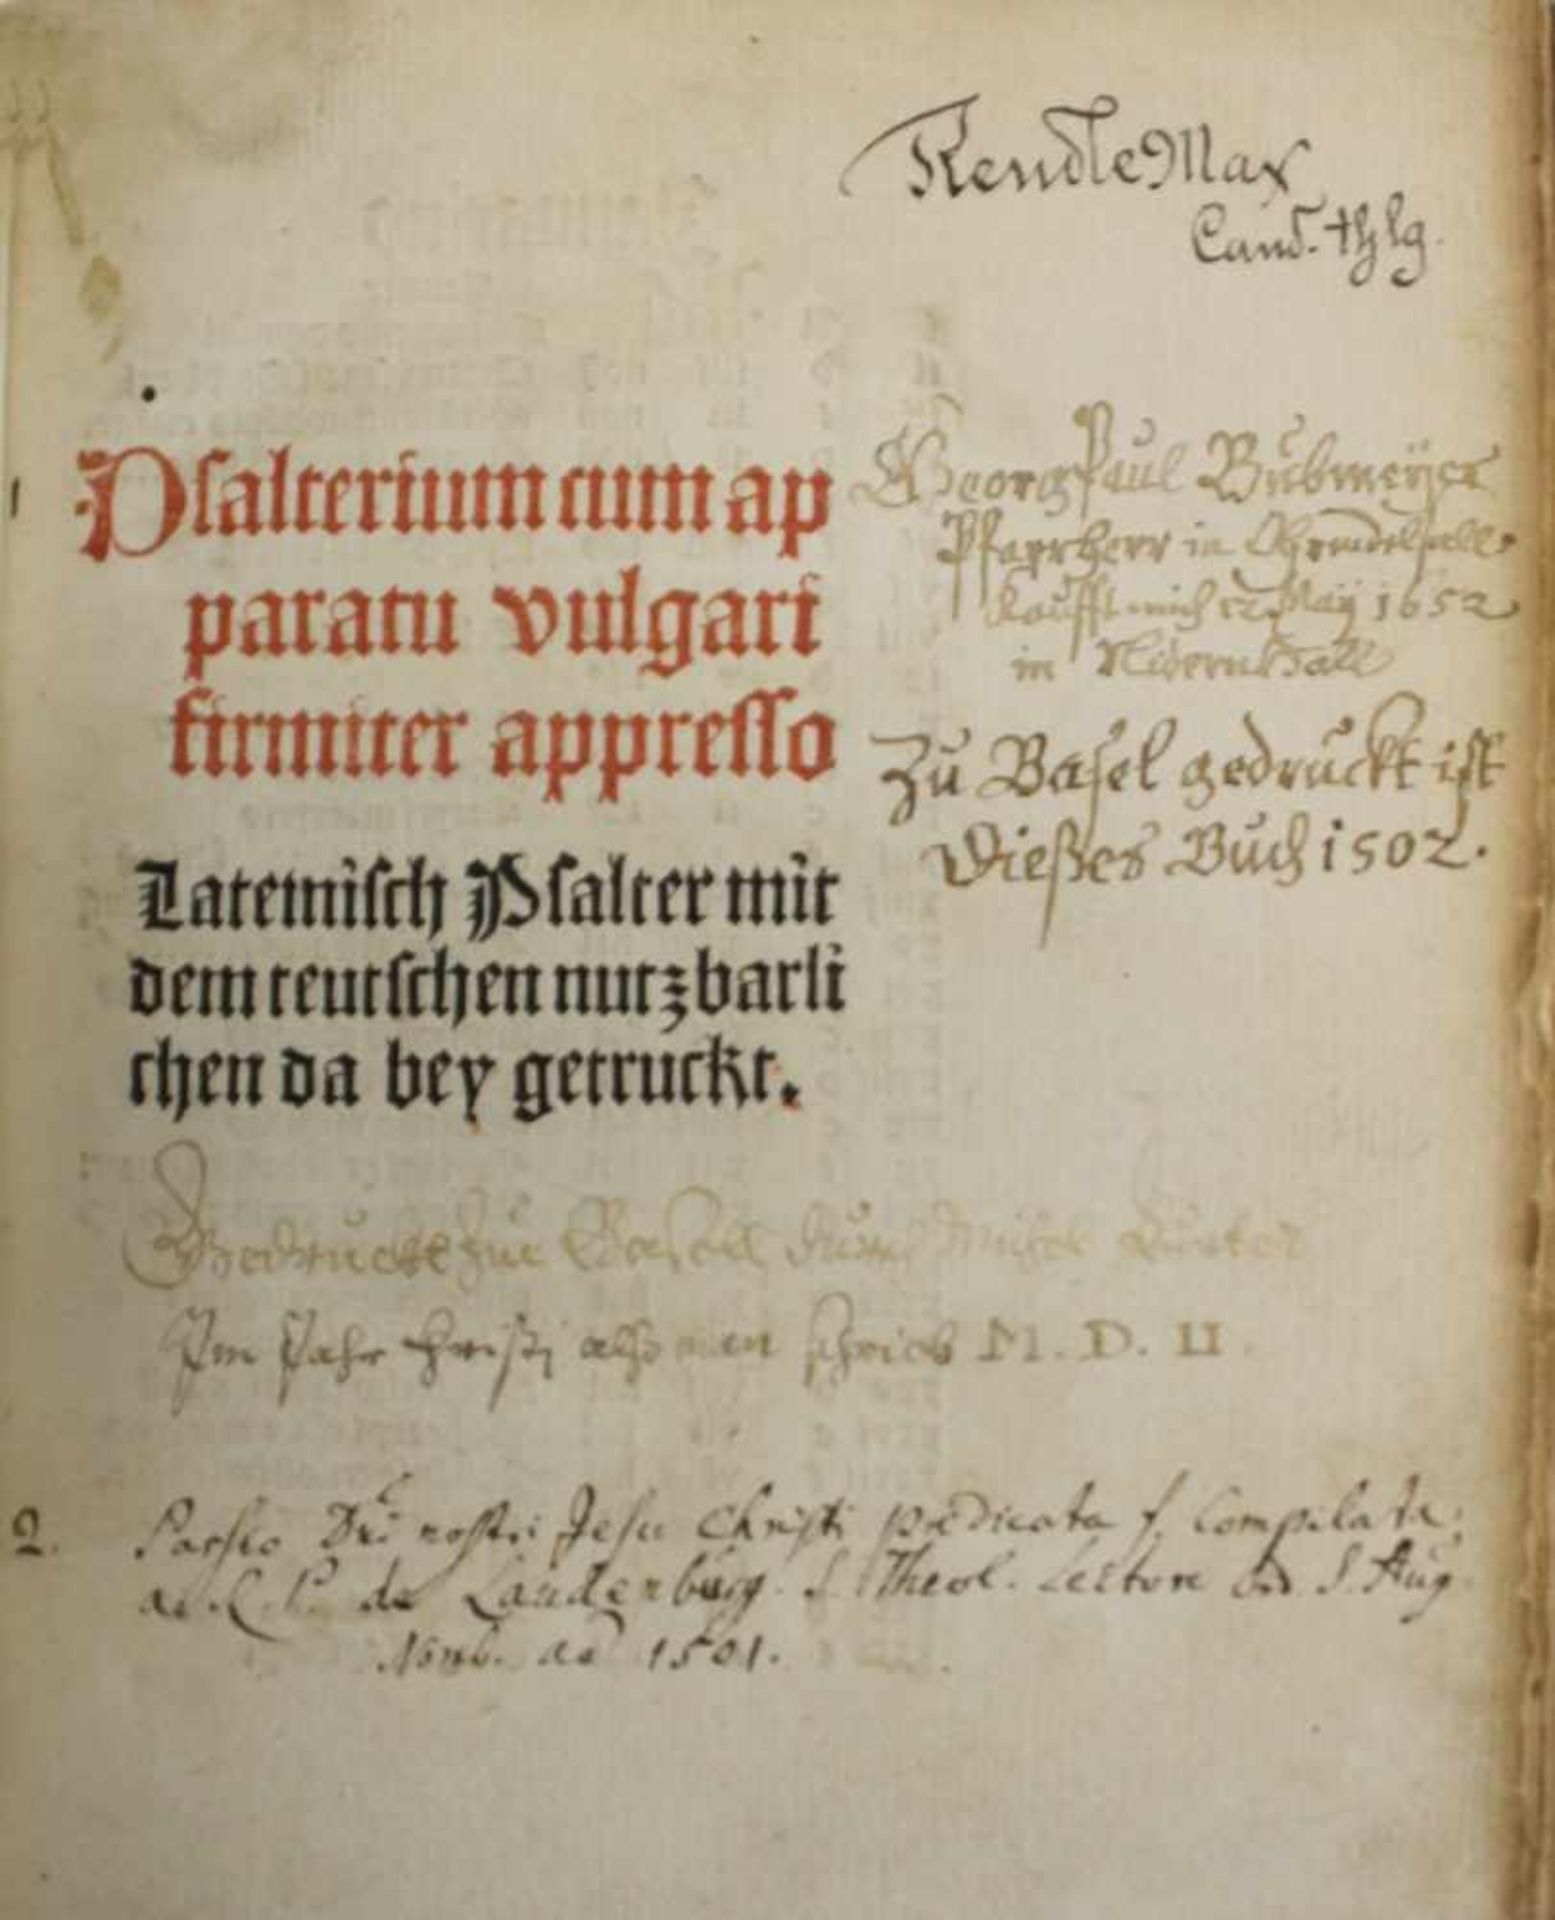 Laudenburg, Reinhard de.Passio d(omi)ni nostri Jesu christi. Nürnberg, (Balth. Schleiffer), 7. IV.